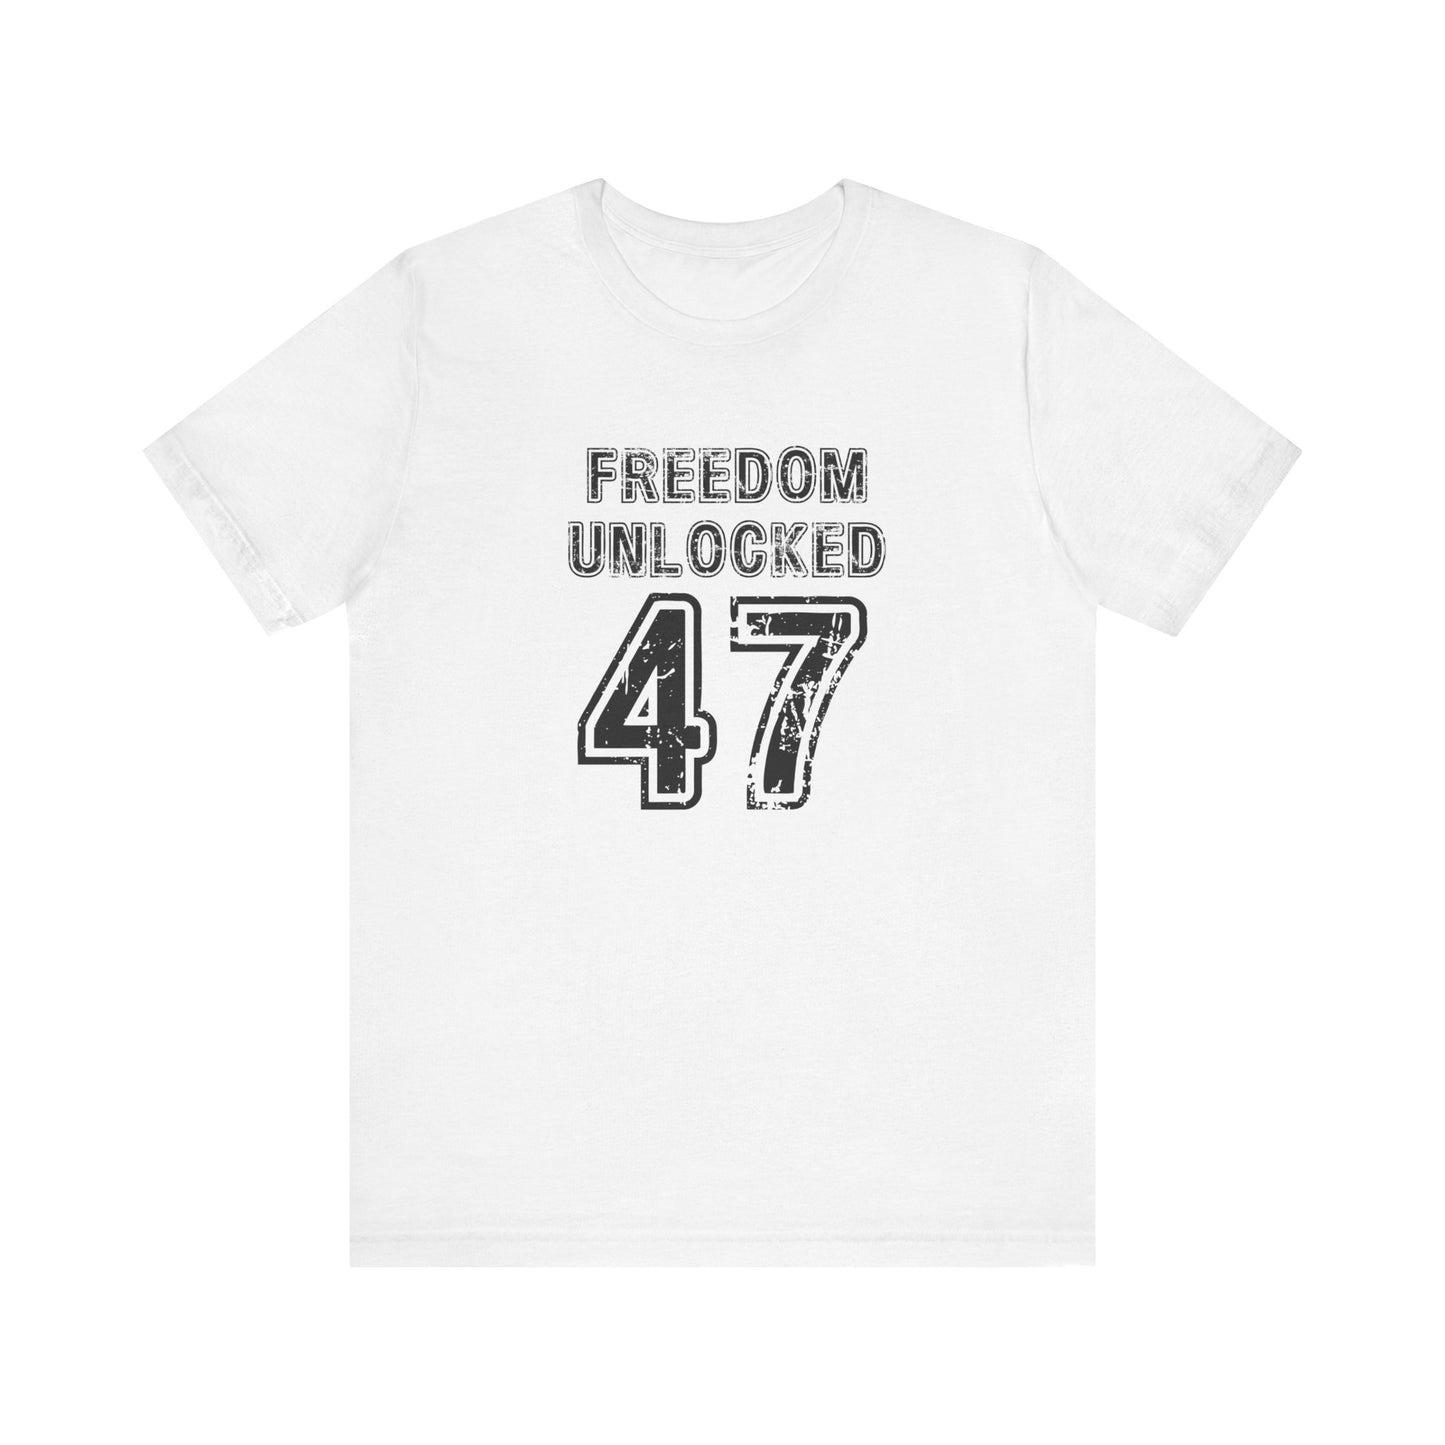 Freedom Unlocked 47 in Black  - Short Sleeve T-Shirt XS-5XL